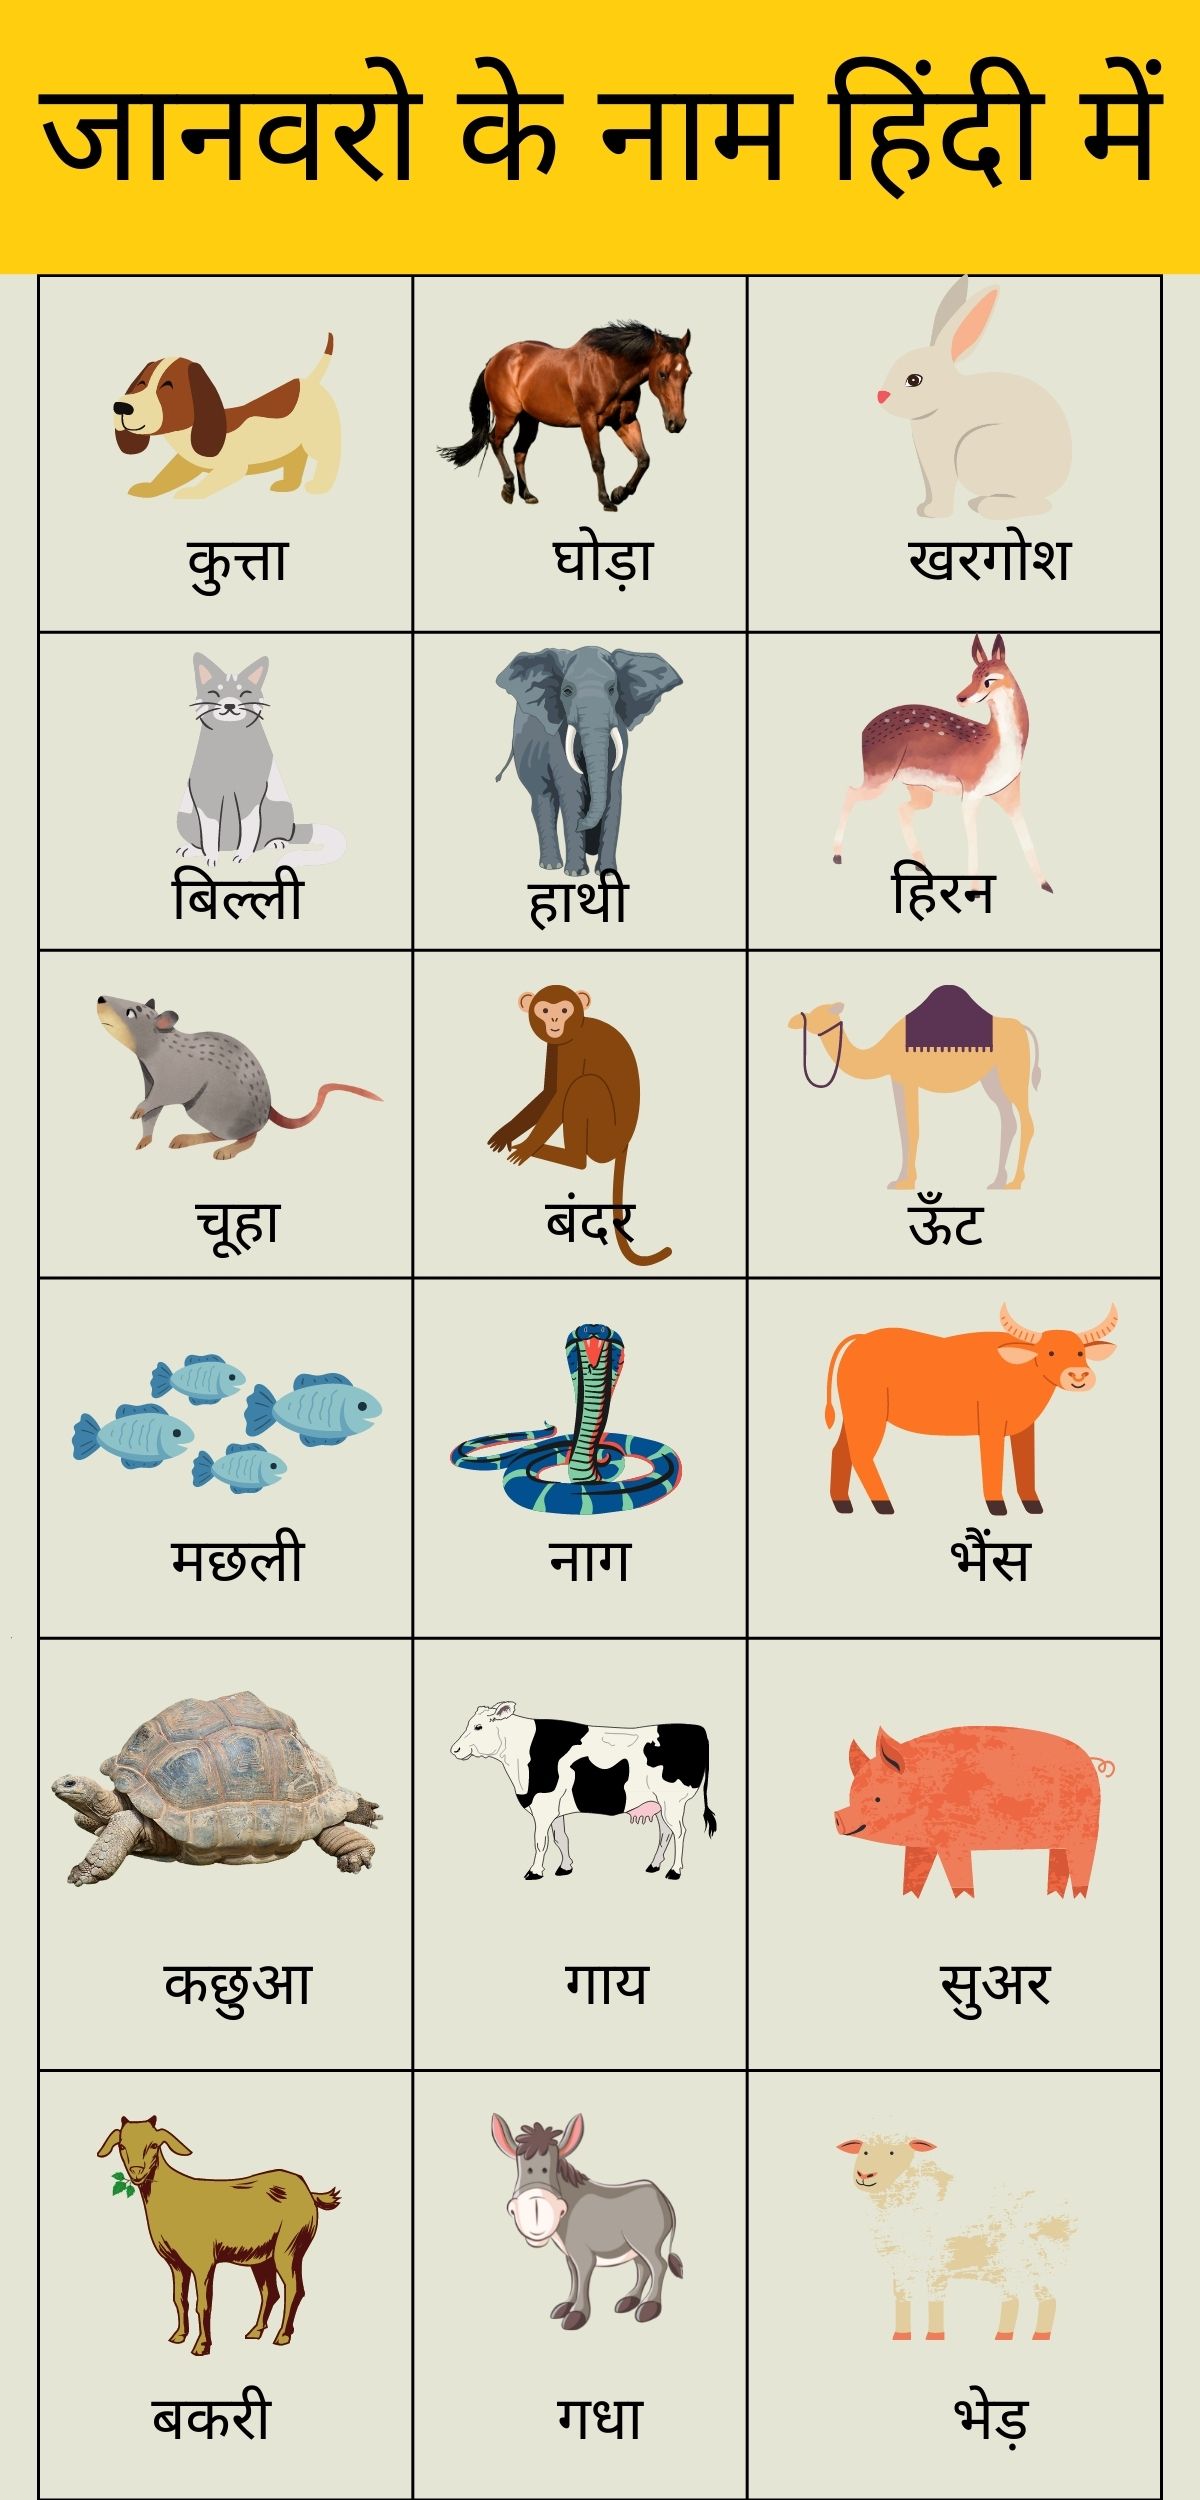 90+ Animals name in Hindi and English | जानवरो के नाम हिंदी में